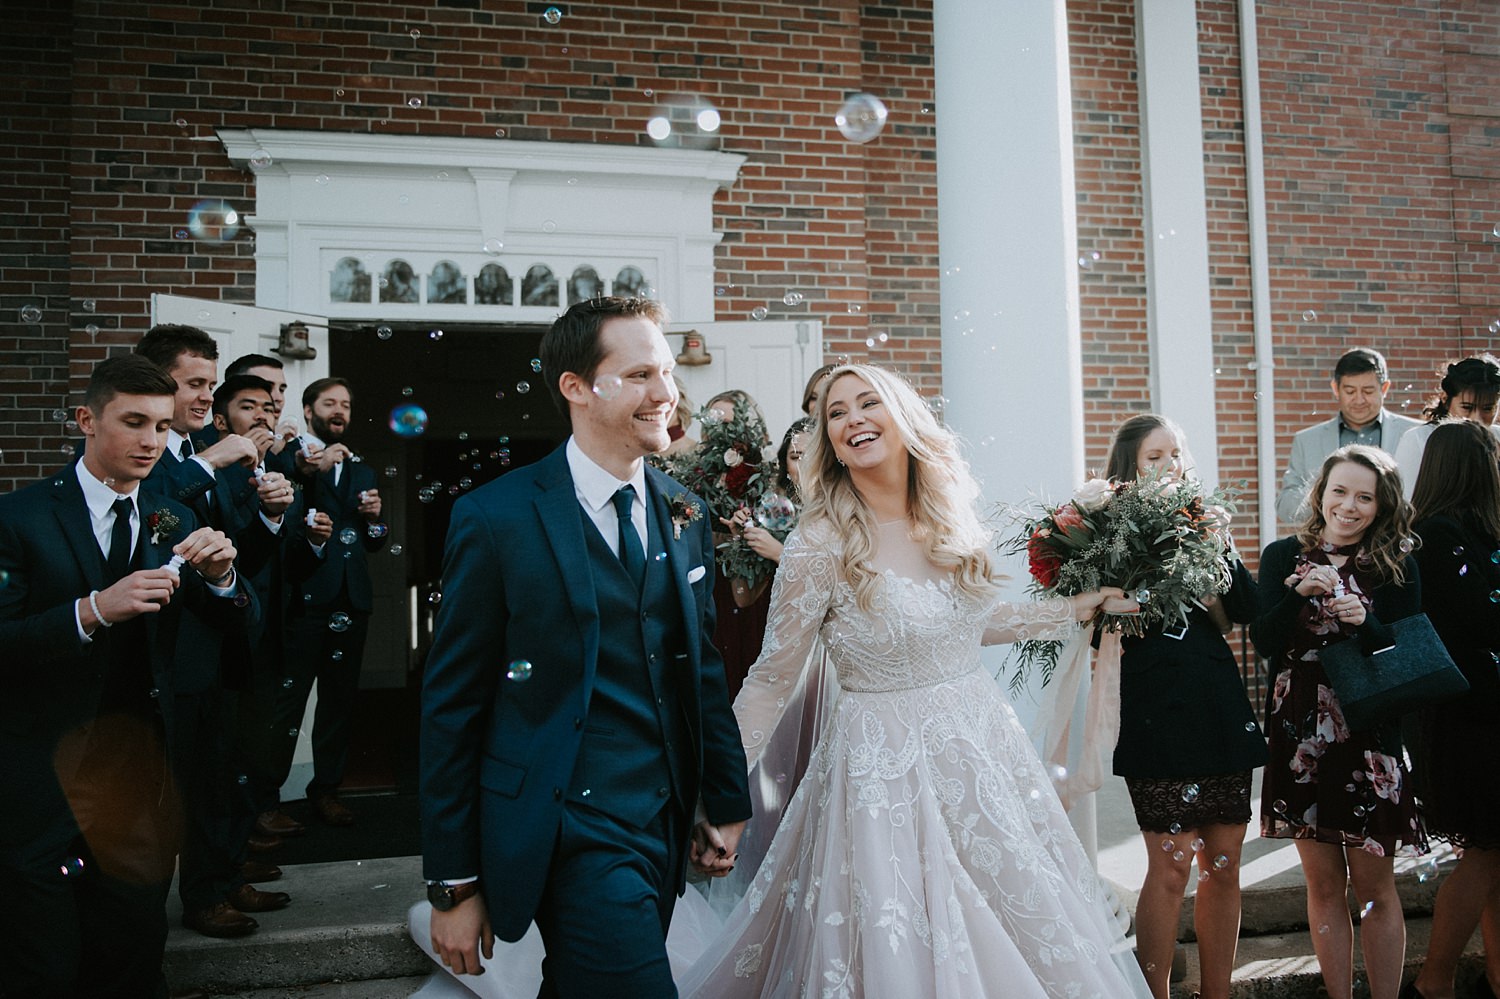 Bride & groom bubble send off in Wethersfield, CT via Jubilee Events